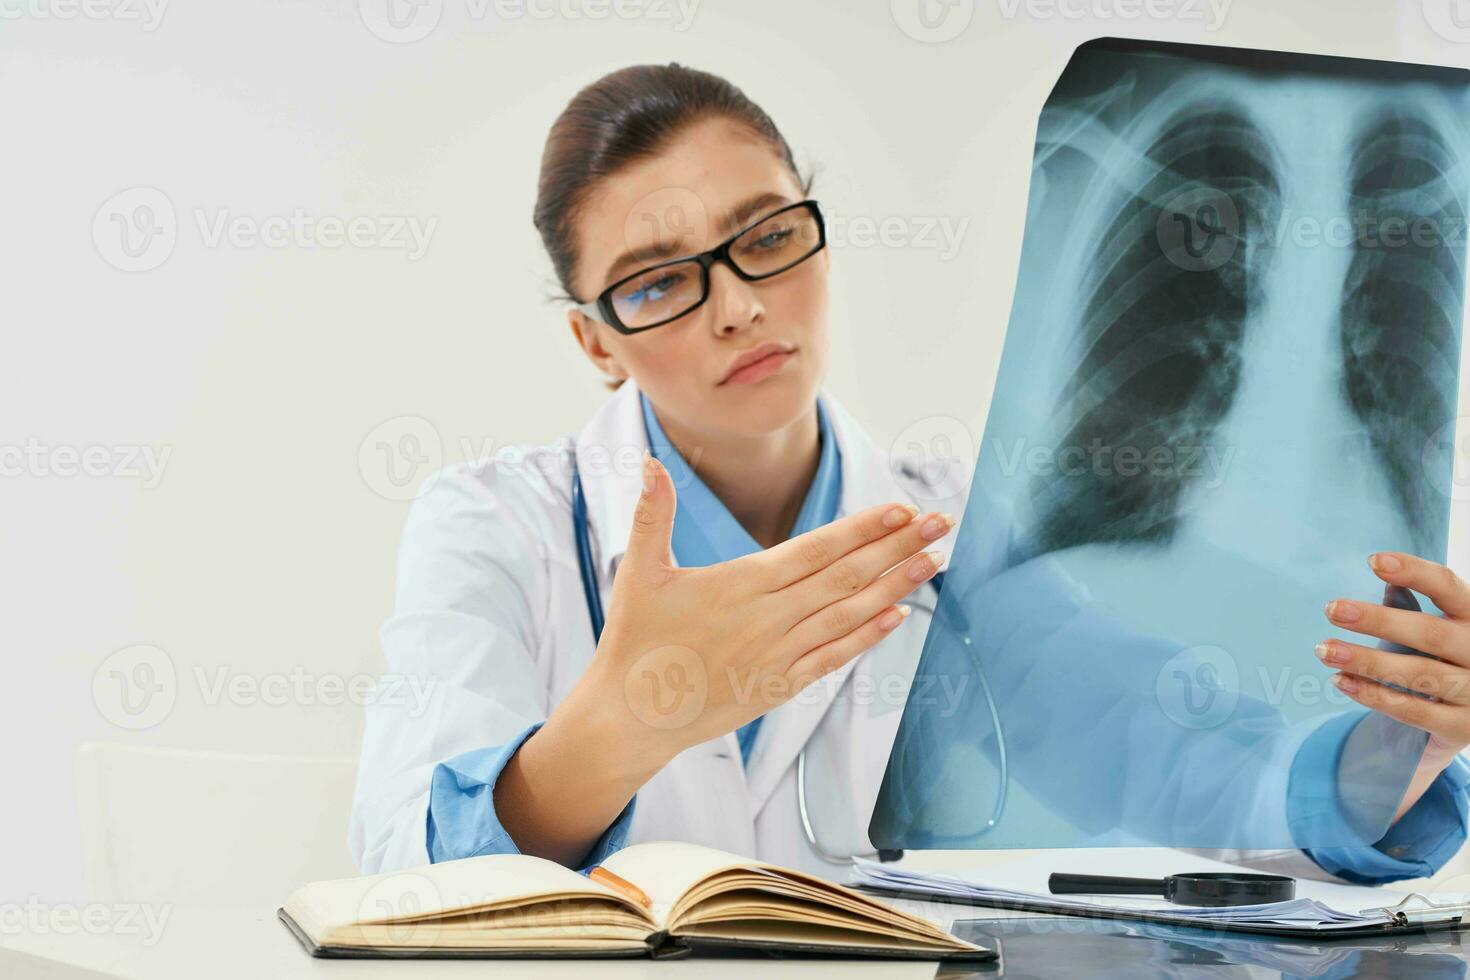 fêmea médico dentro branco casaco remédio diagnóstico raio X foto